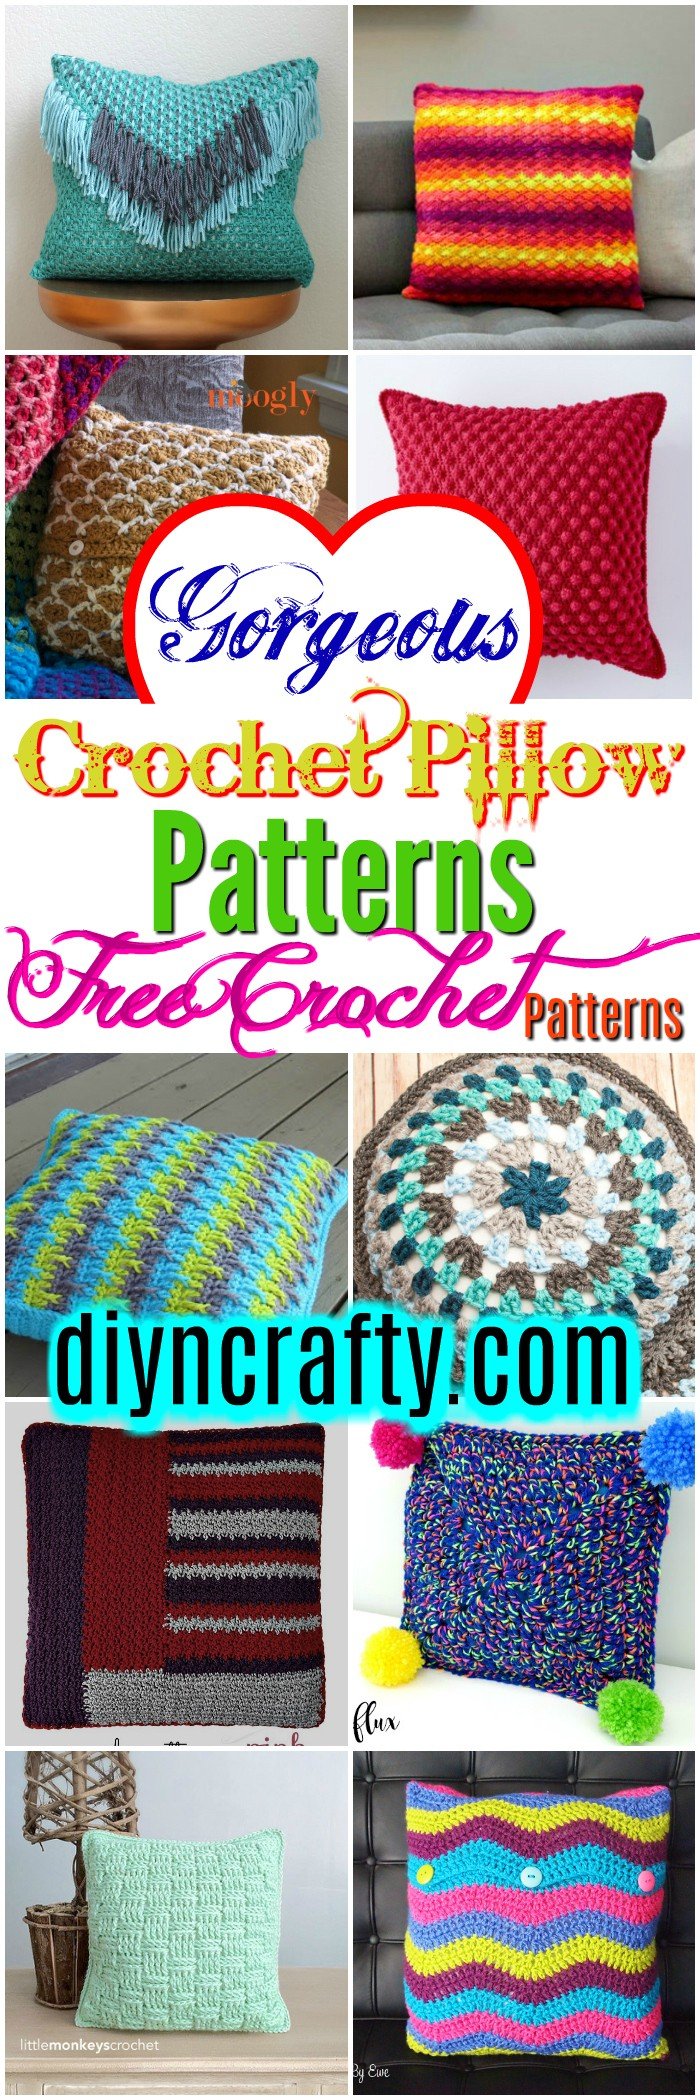 Free Crochet Pillow Patterns Free Crochet Pillow Patterns Free Crochet Patterns